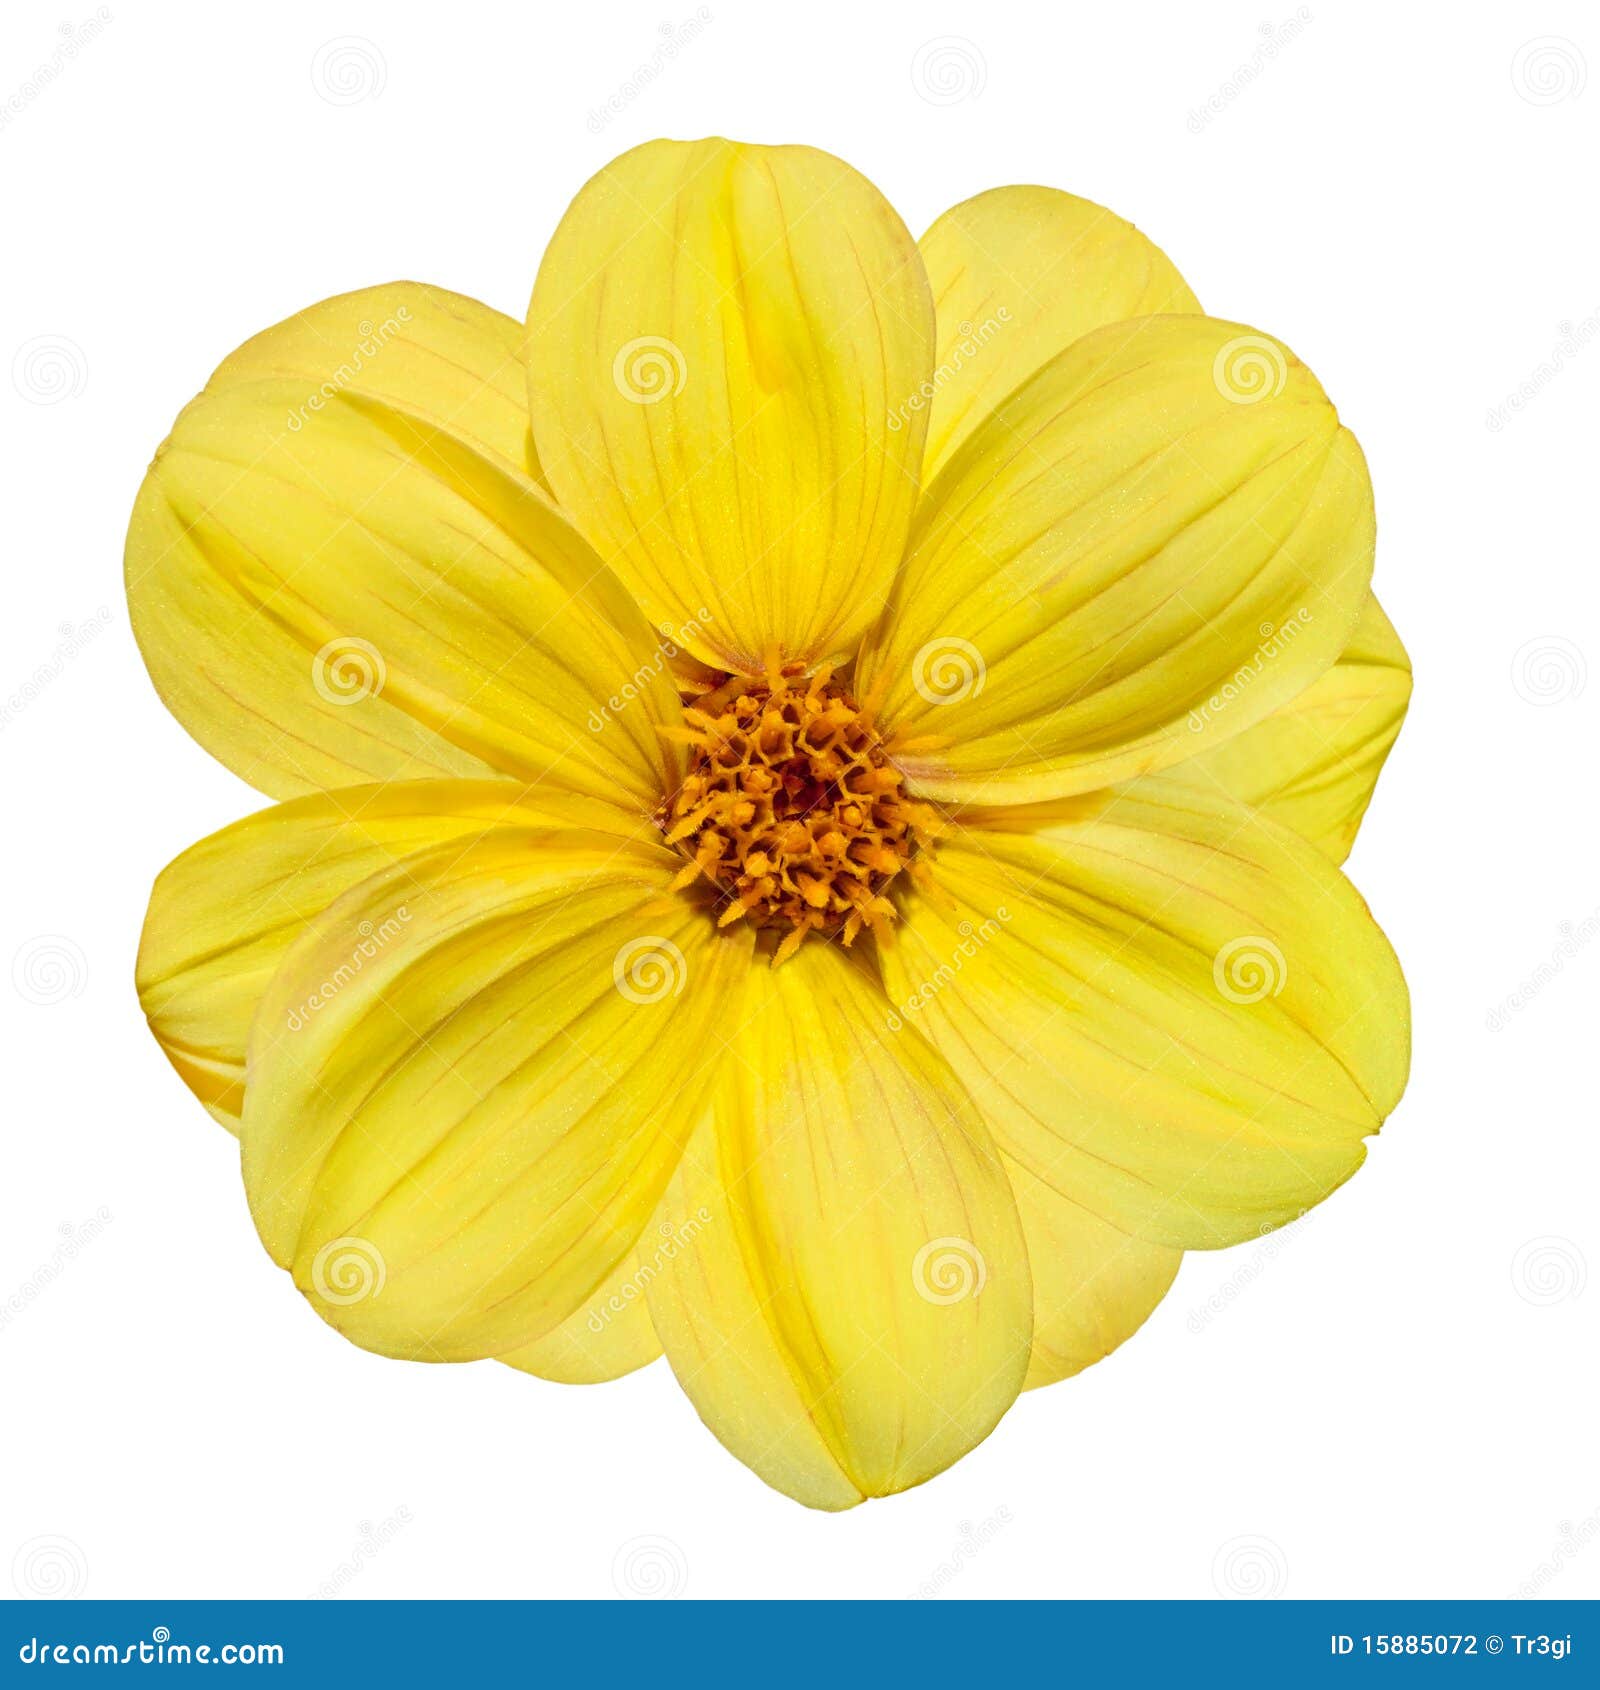 Yellow Dahlia Flower Isolated On White Background Stock ...
